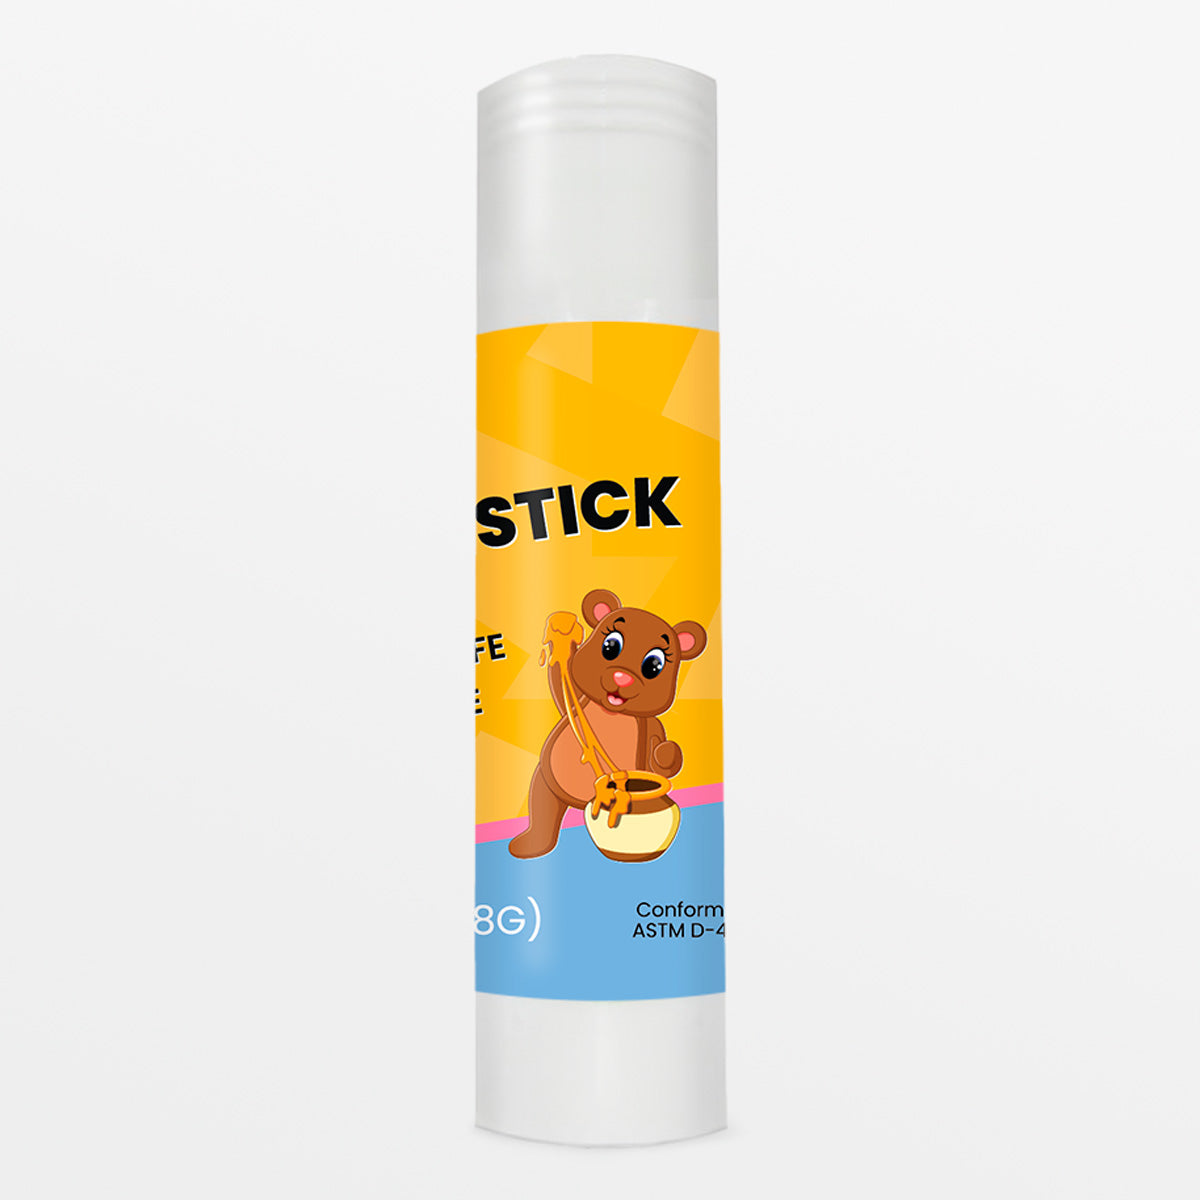 59376: Glue Sticks, Bulk